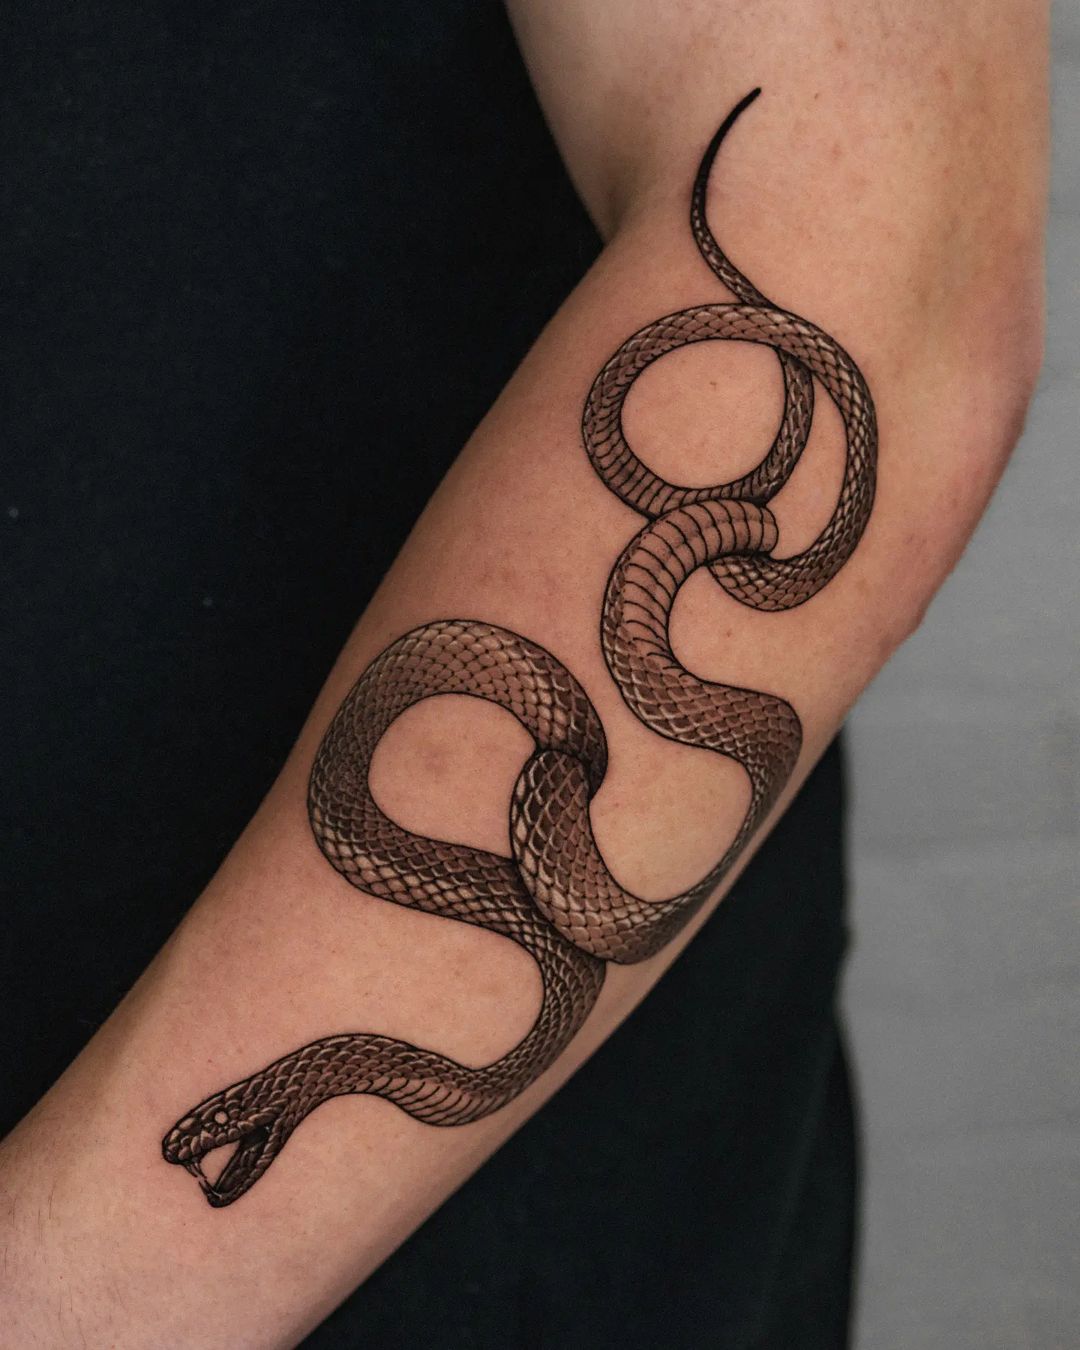 Black snake tattoo by koonoblk